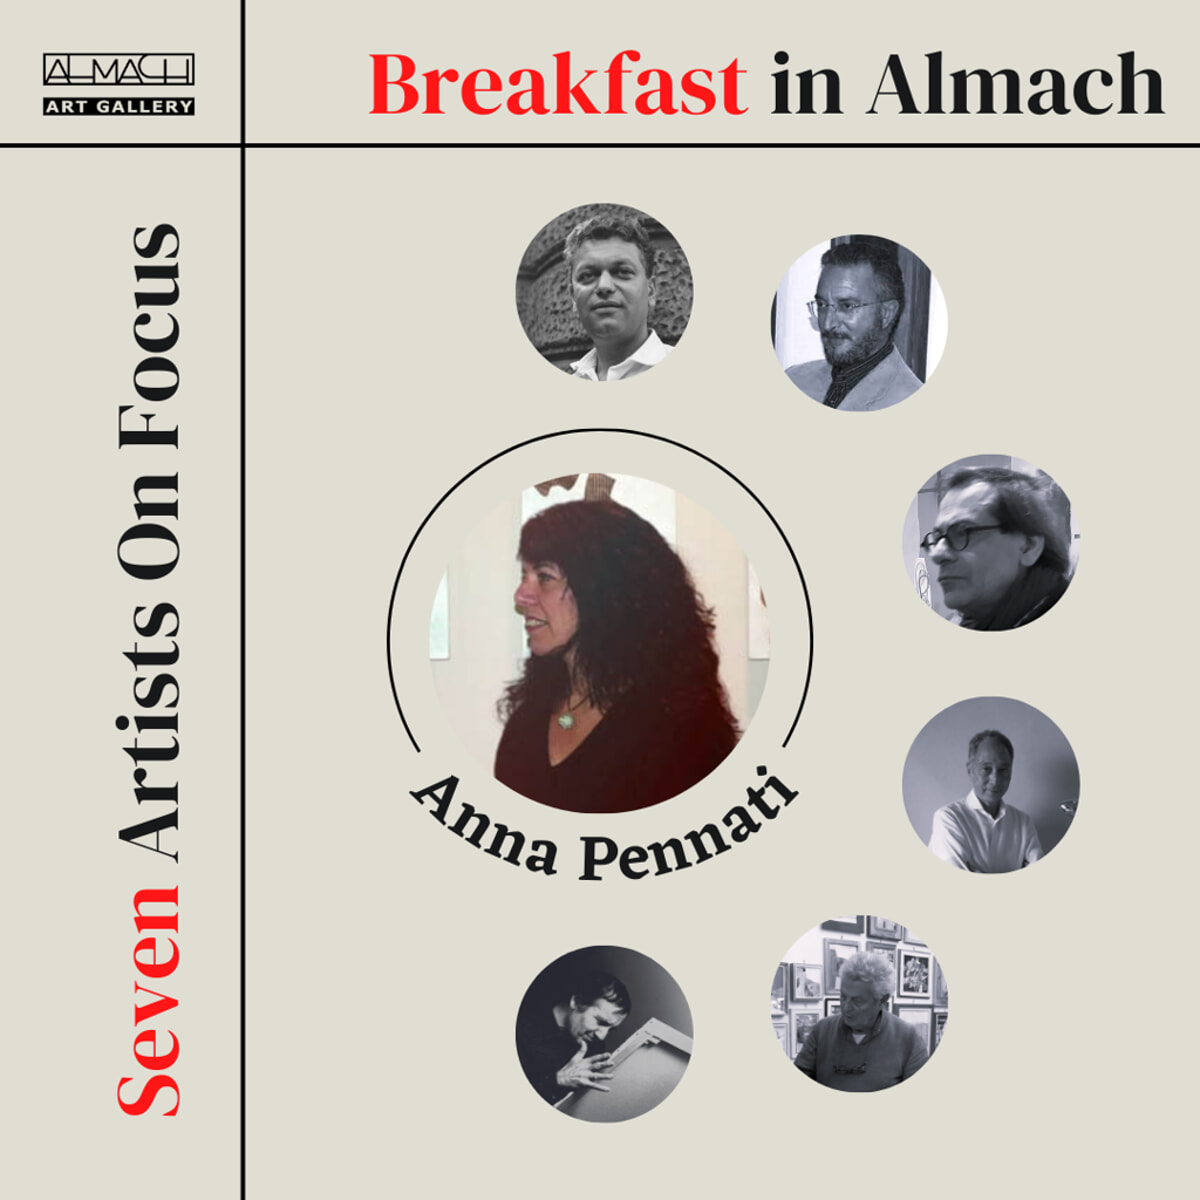 Seven artists on focus – Breakfast in almach – Anna Pennati